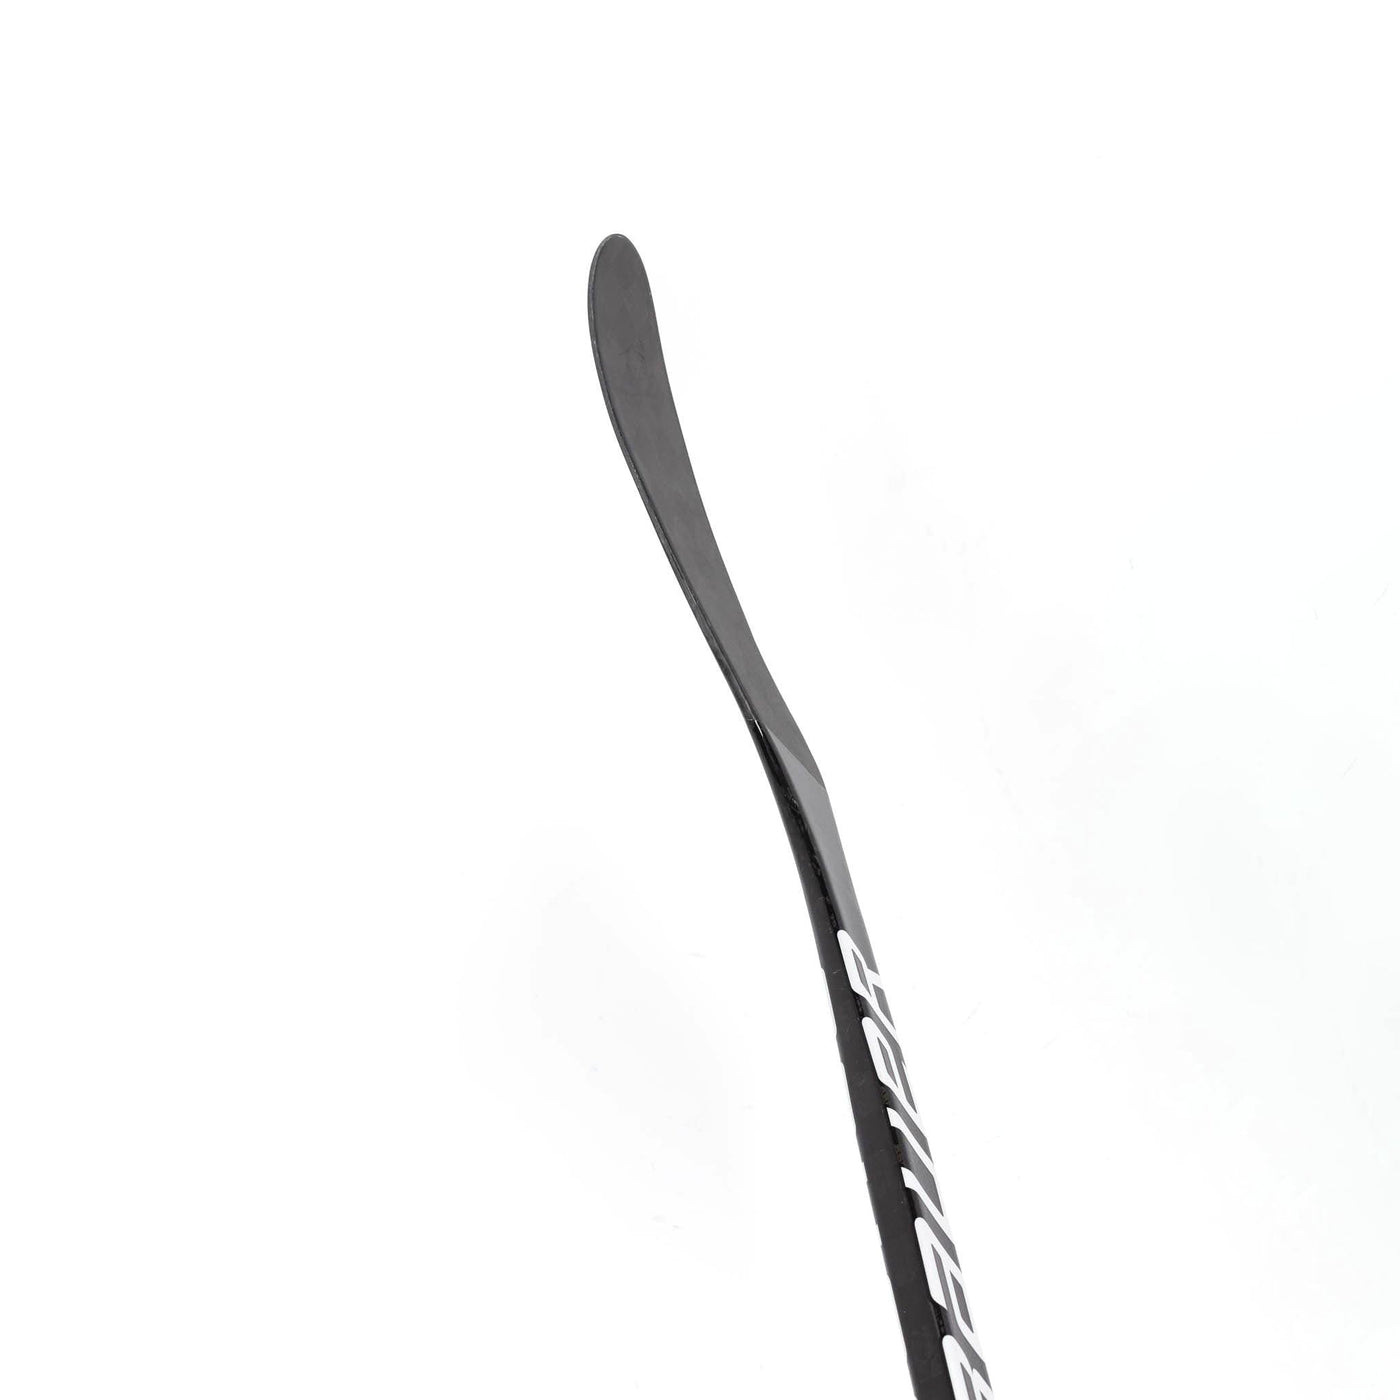 Bauer Supreme 3S Pro Intermediate Hockey Stick